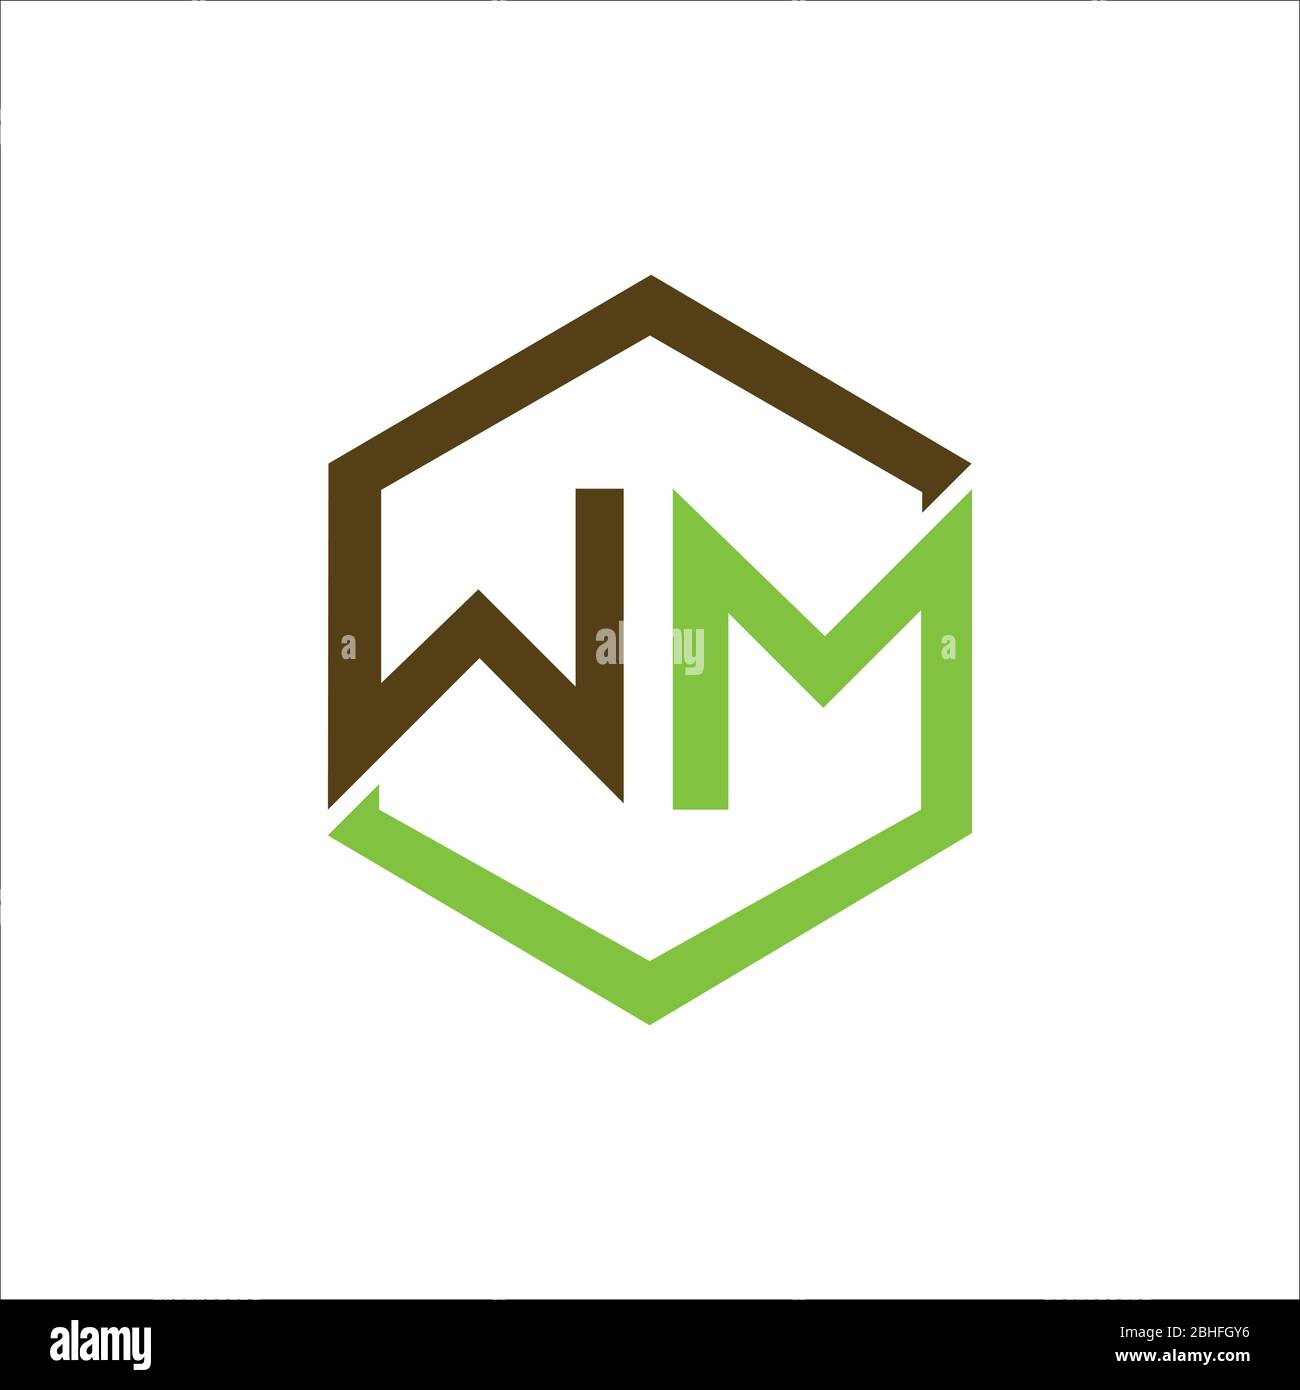 Initial letter wm logo or mw logo vector design template Stock Vector